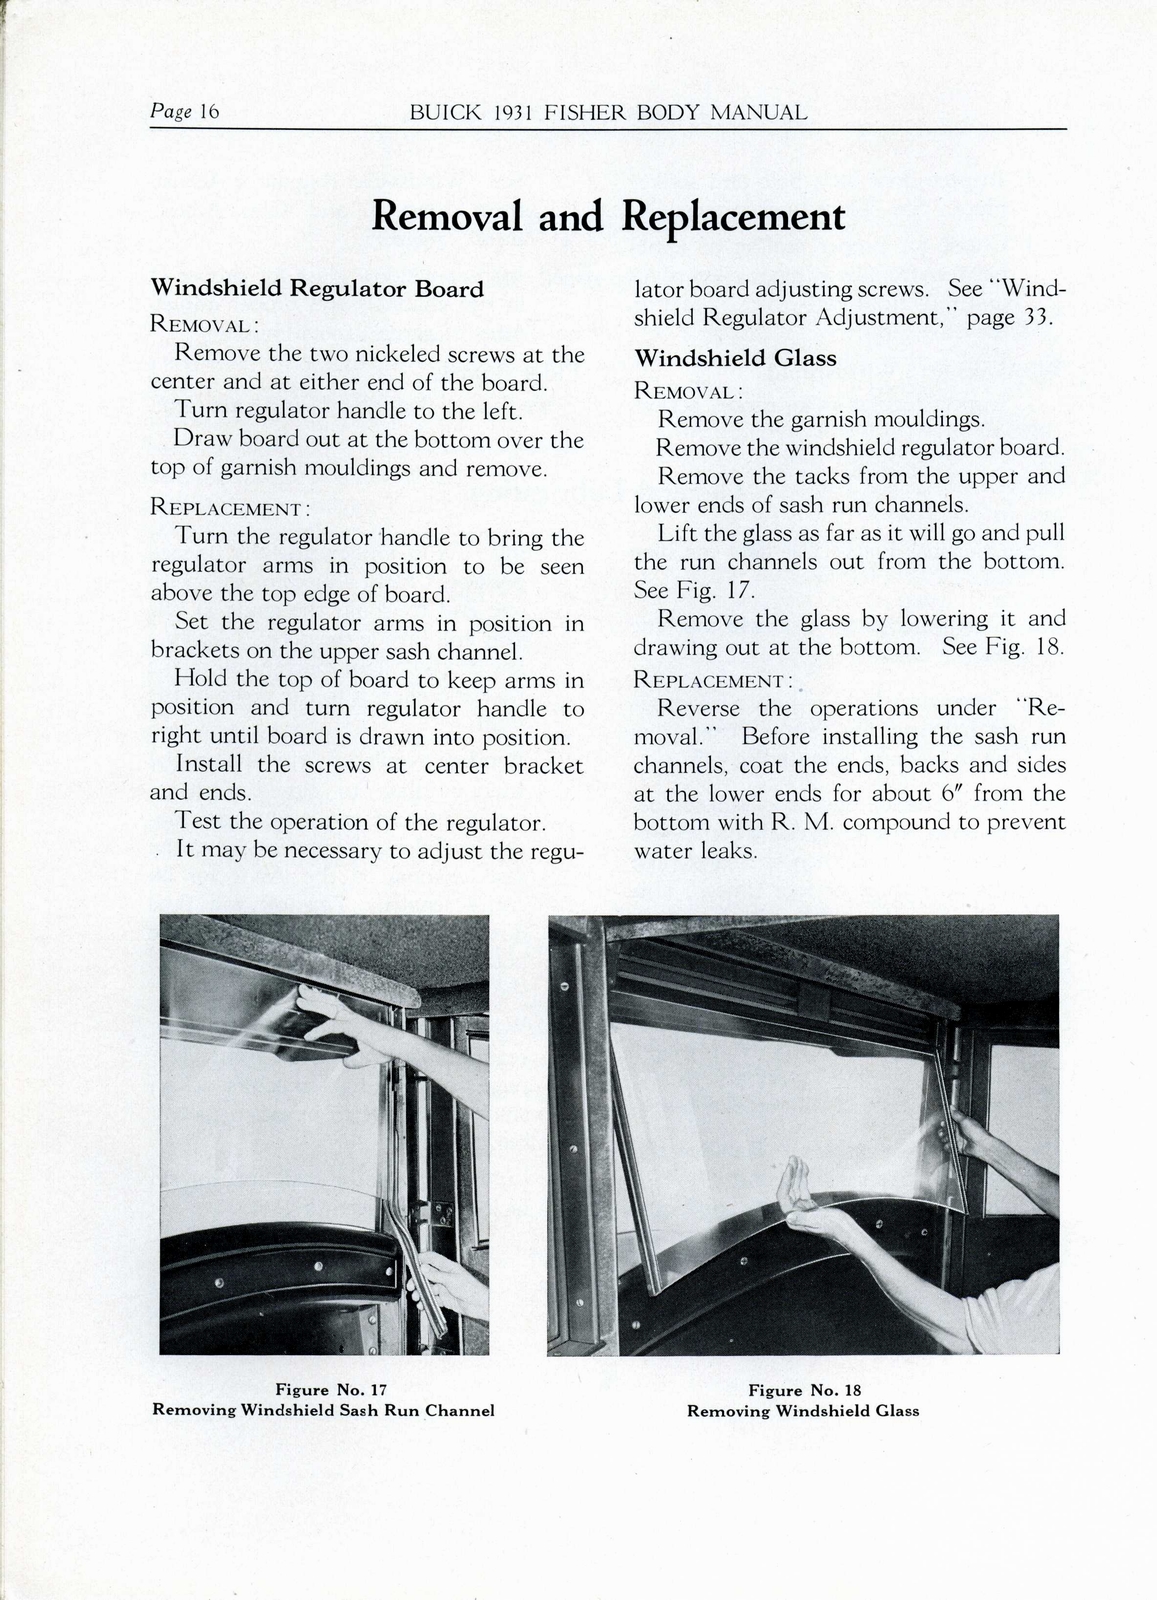 n_1931 Buick Fisher Body Manual-16.jpg